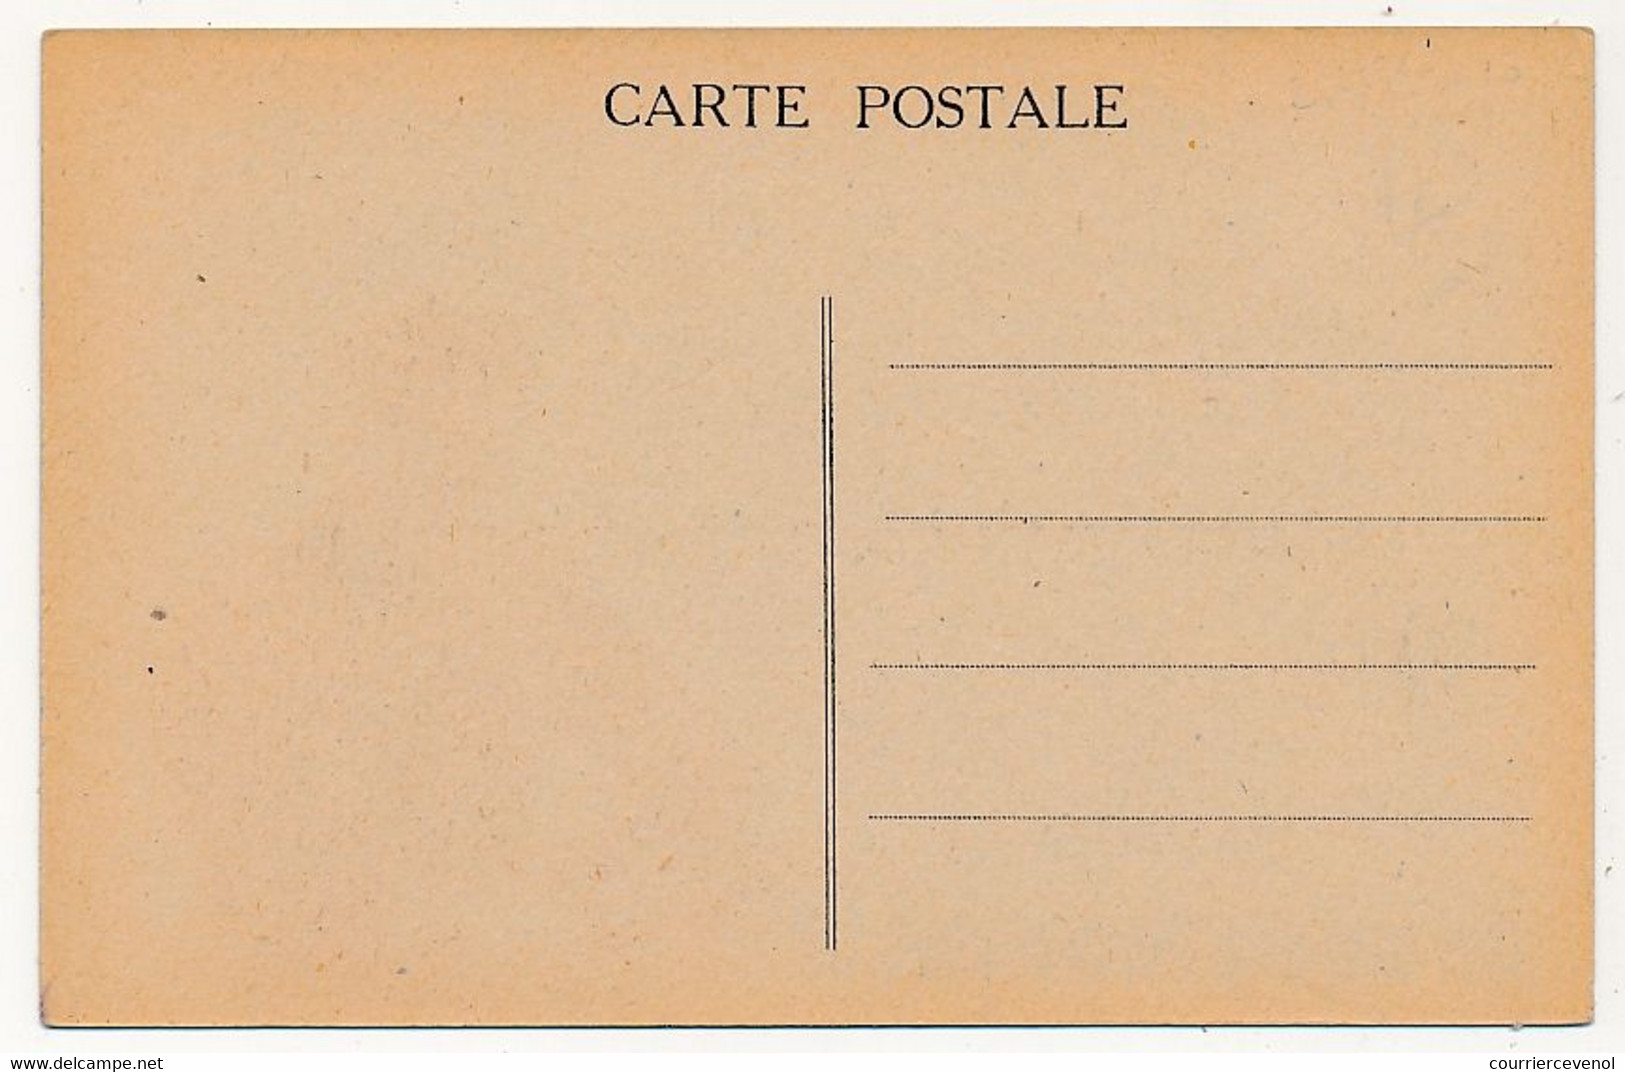 CPSM - Te Souviens-tu ? Illustration Paul Claveau (1948) S.T.O. - Oorlog 1939-45